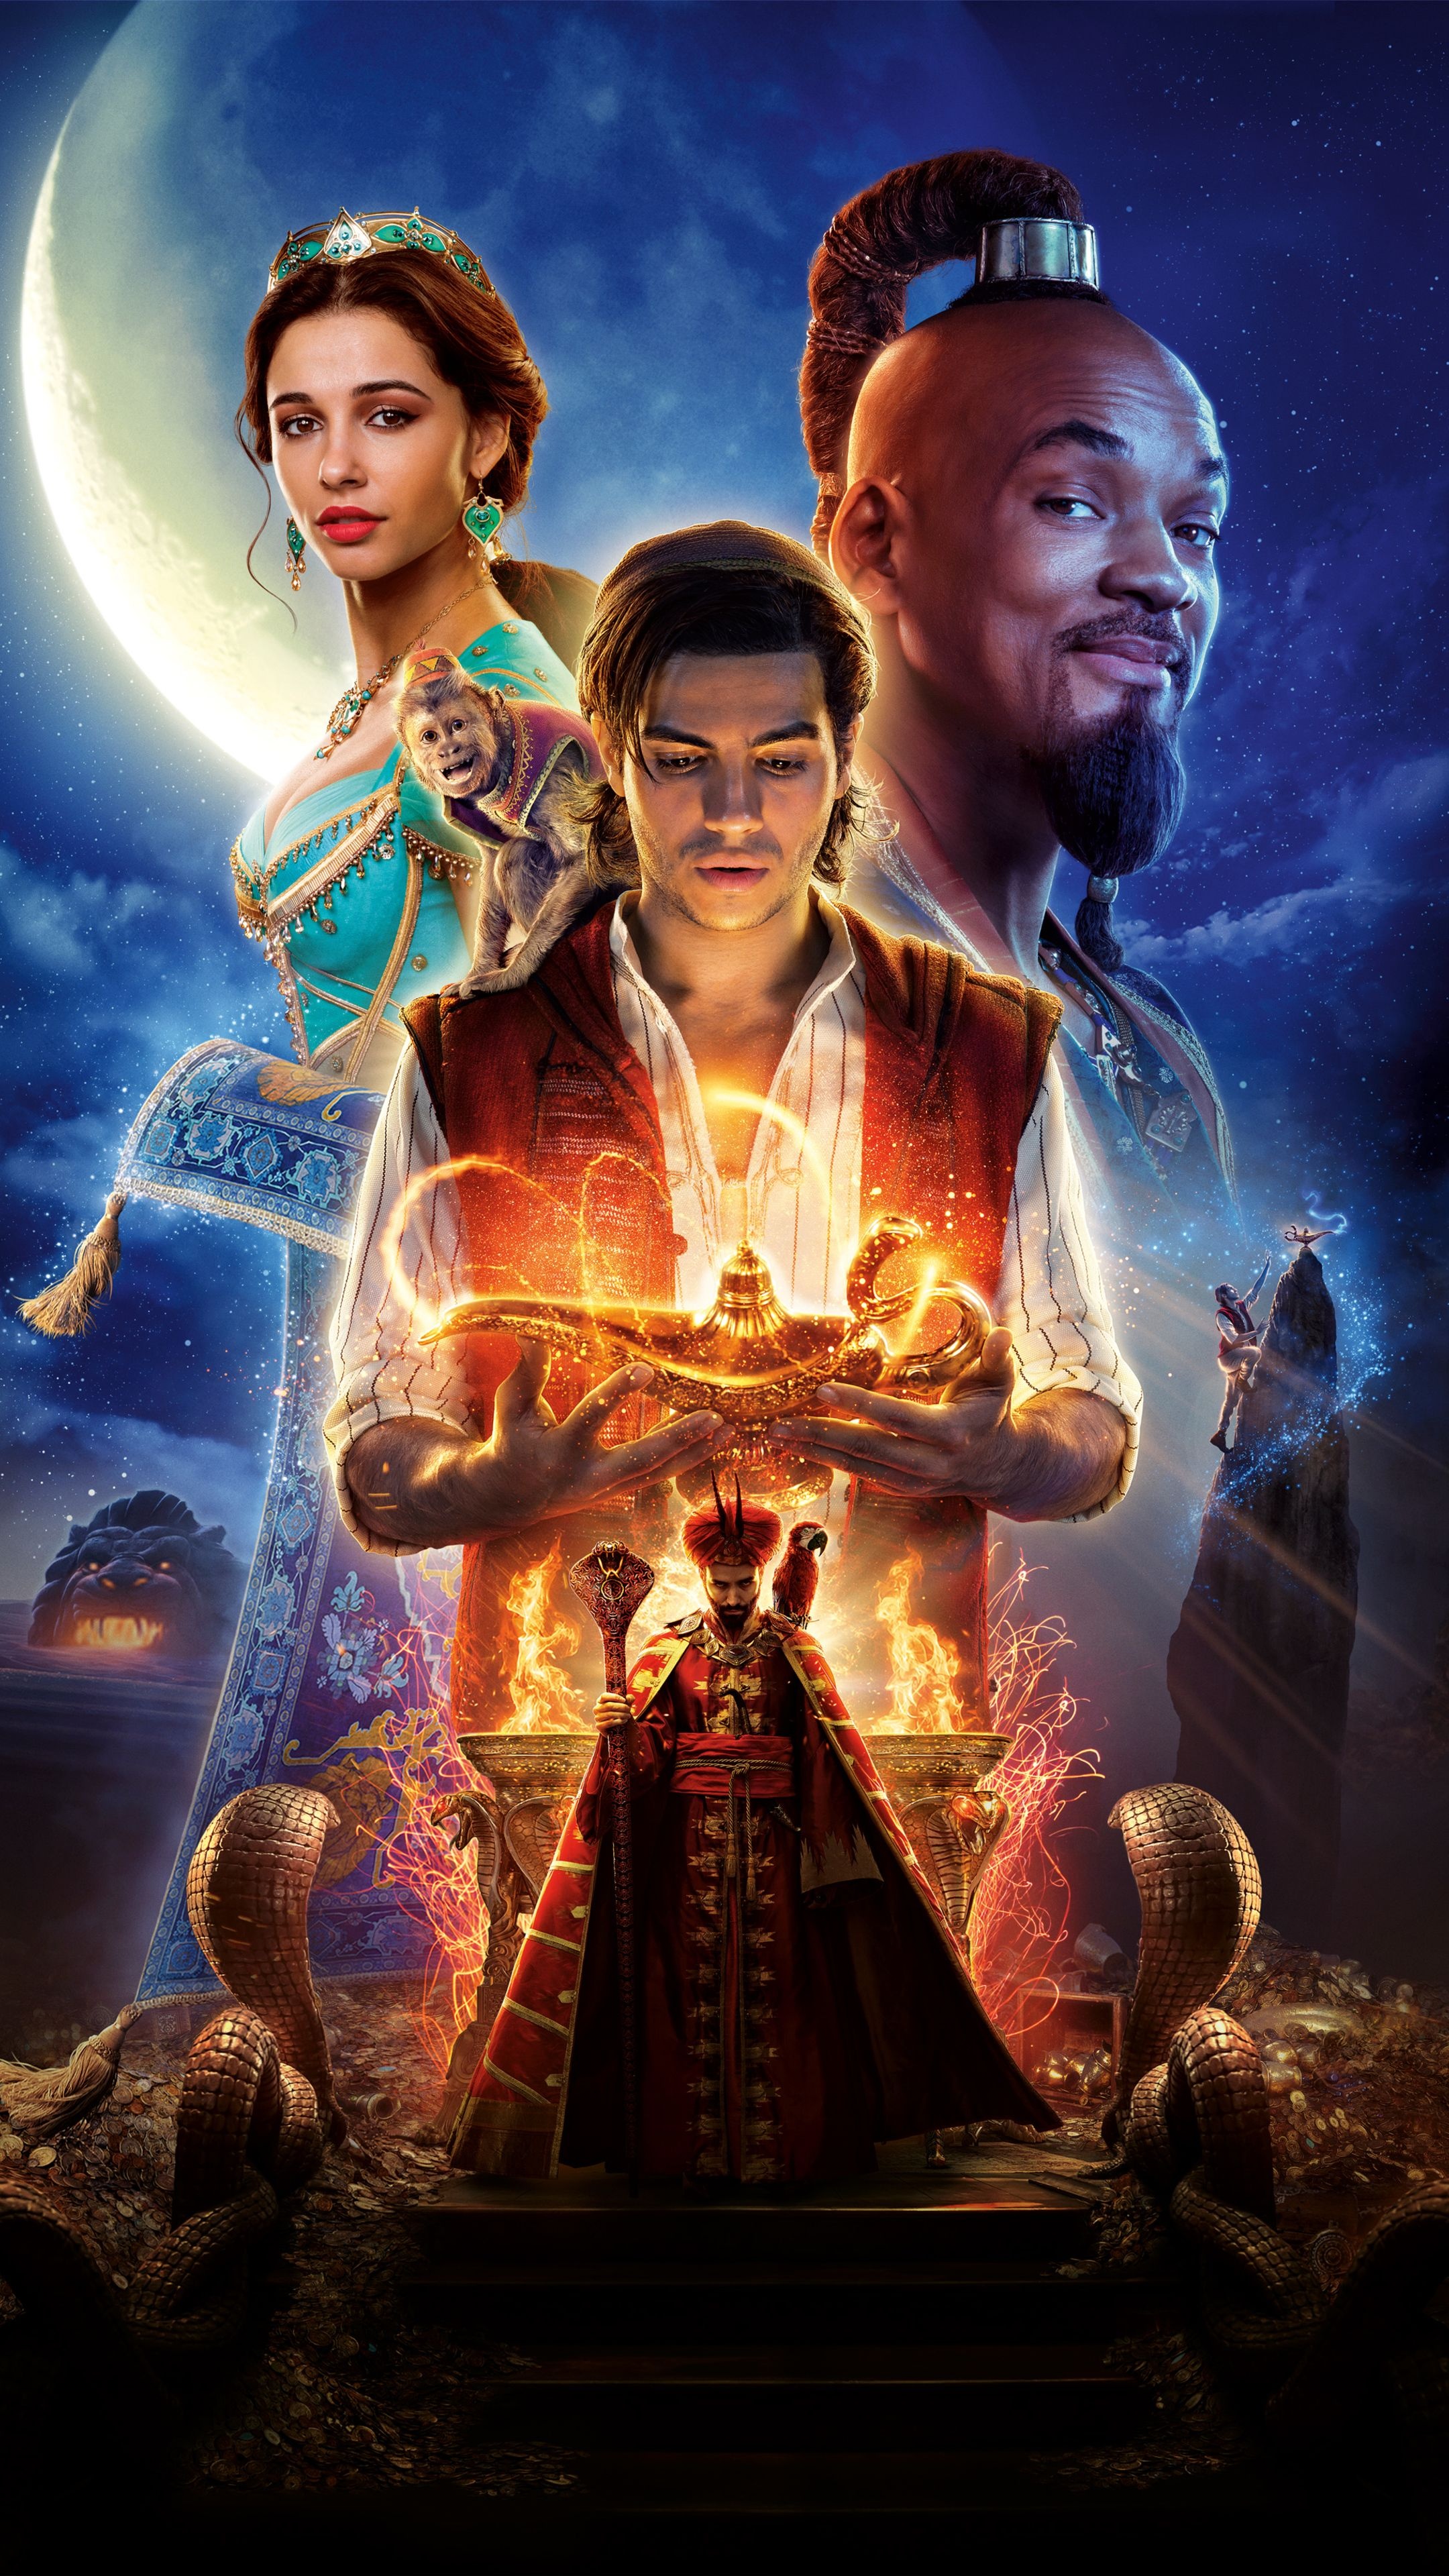 Aladdin movie, Movie poster, 8K resolution, Magical adventure, 2160x3840 4K Phone